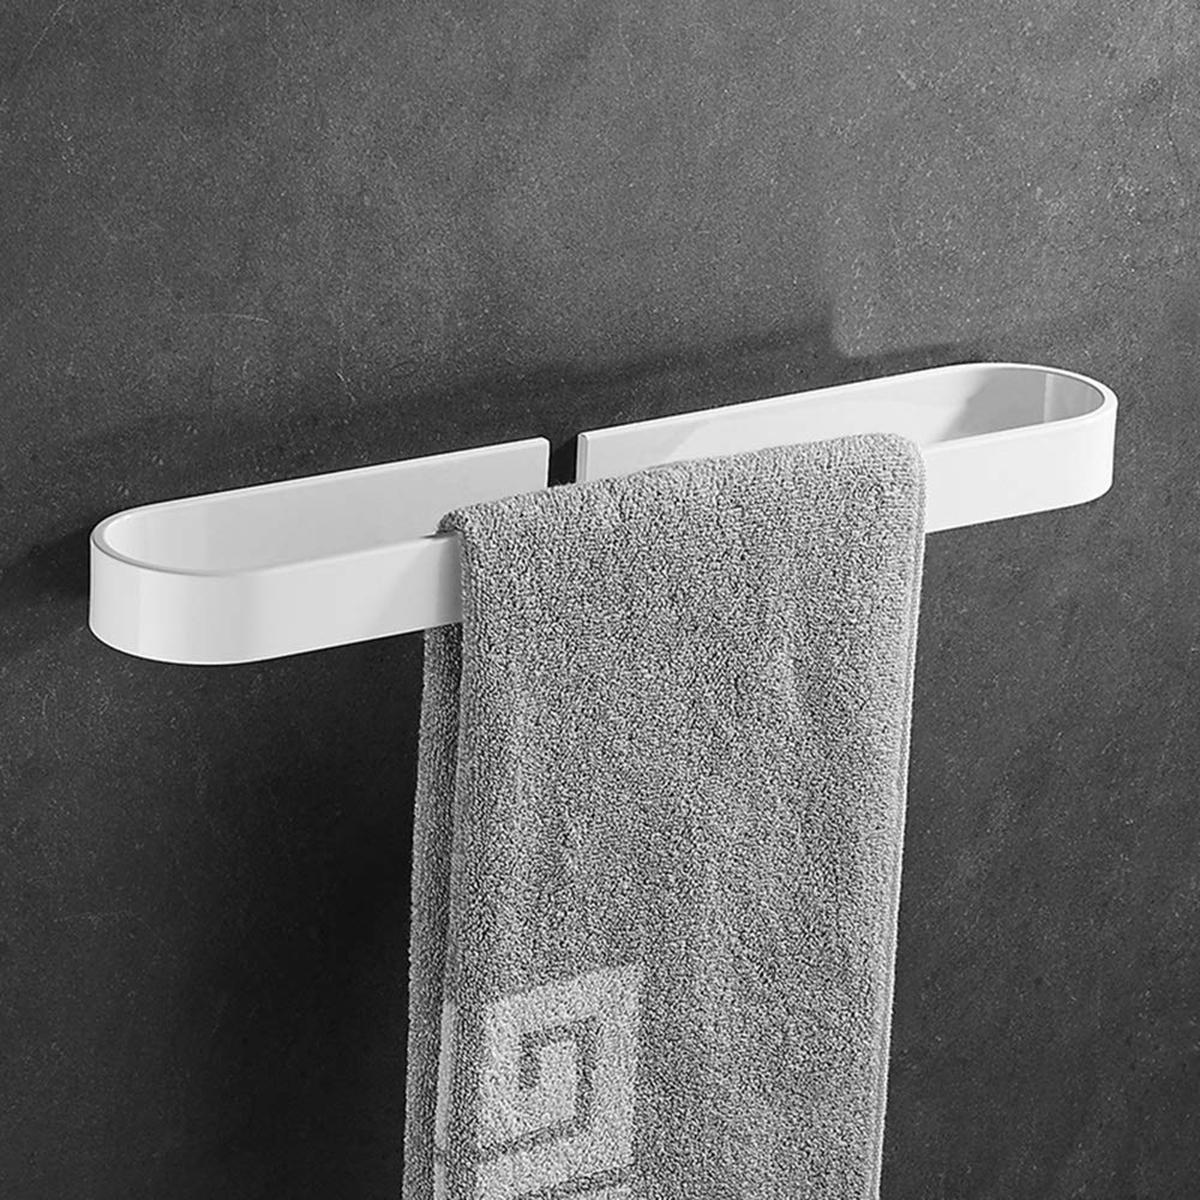 30/40 / 50CM badkamer enkele staaf handdoekhanddoekrek handdoekhouder wandgemonteerd rek